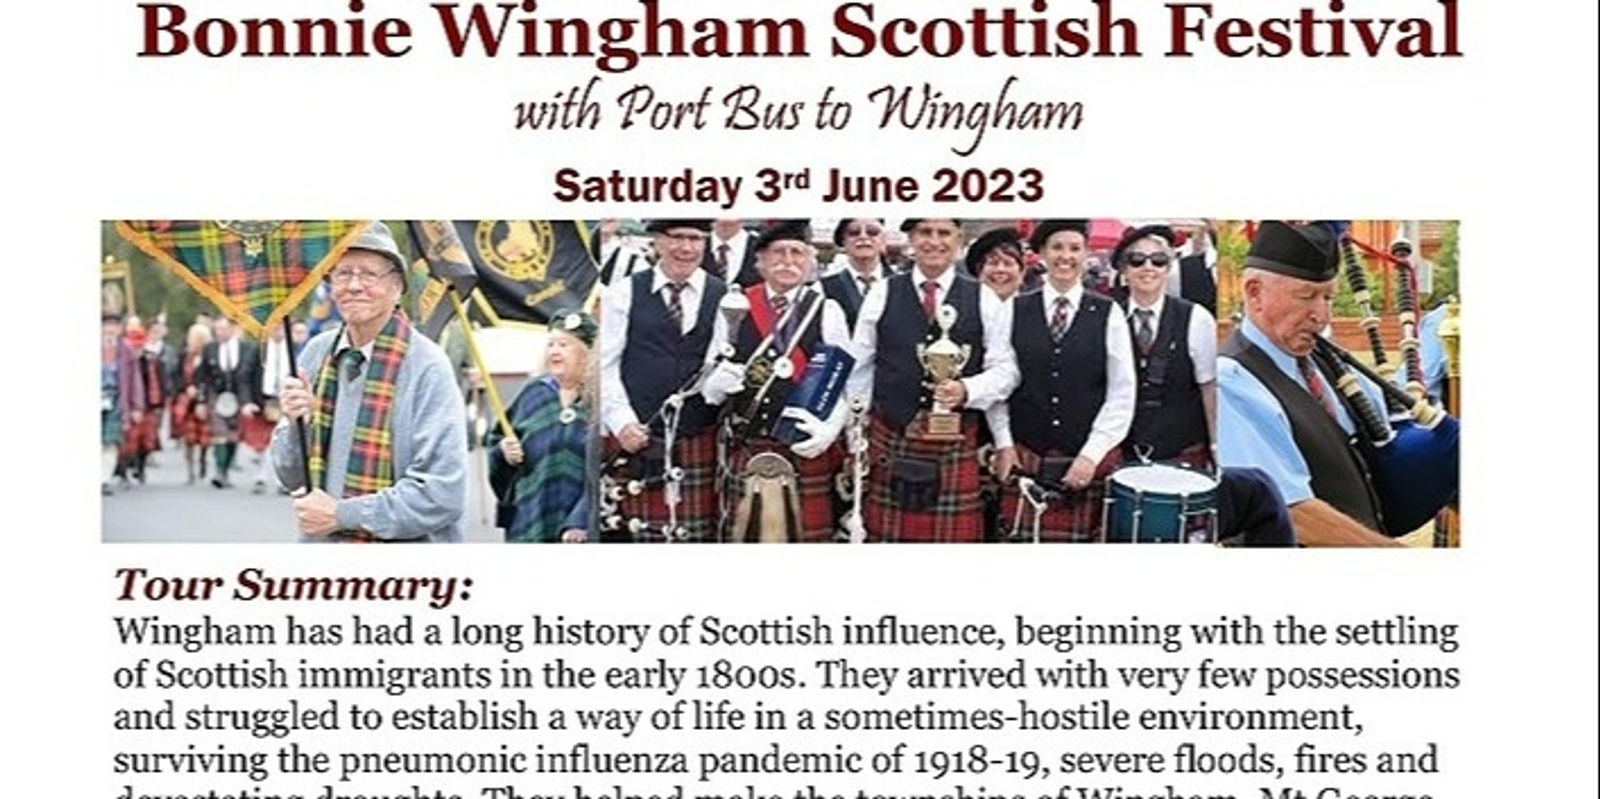 Banner image for Bonnie Wingham Scottish Festival with Port Bus